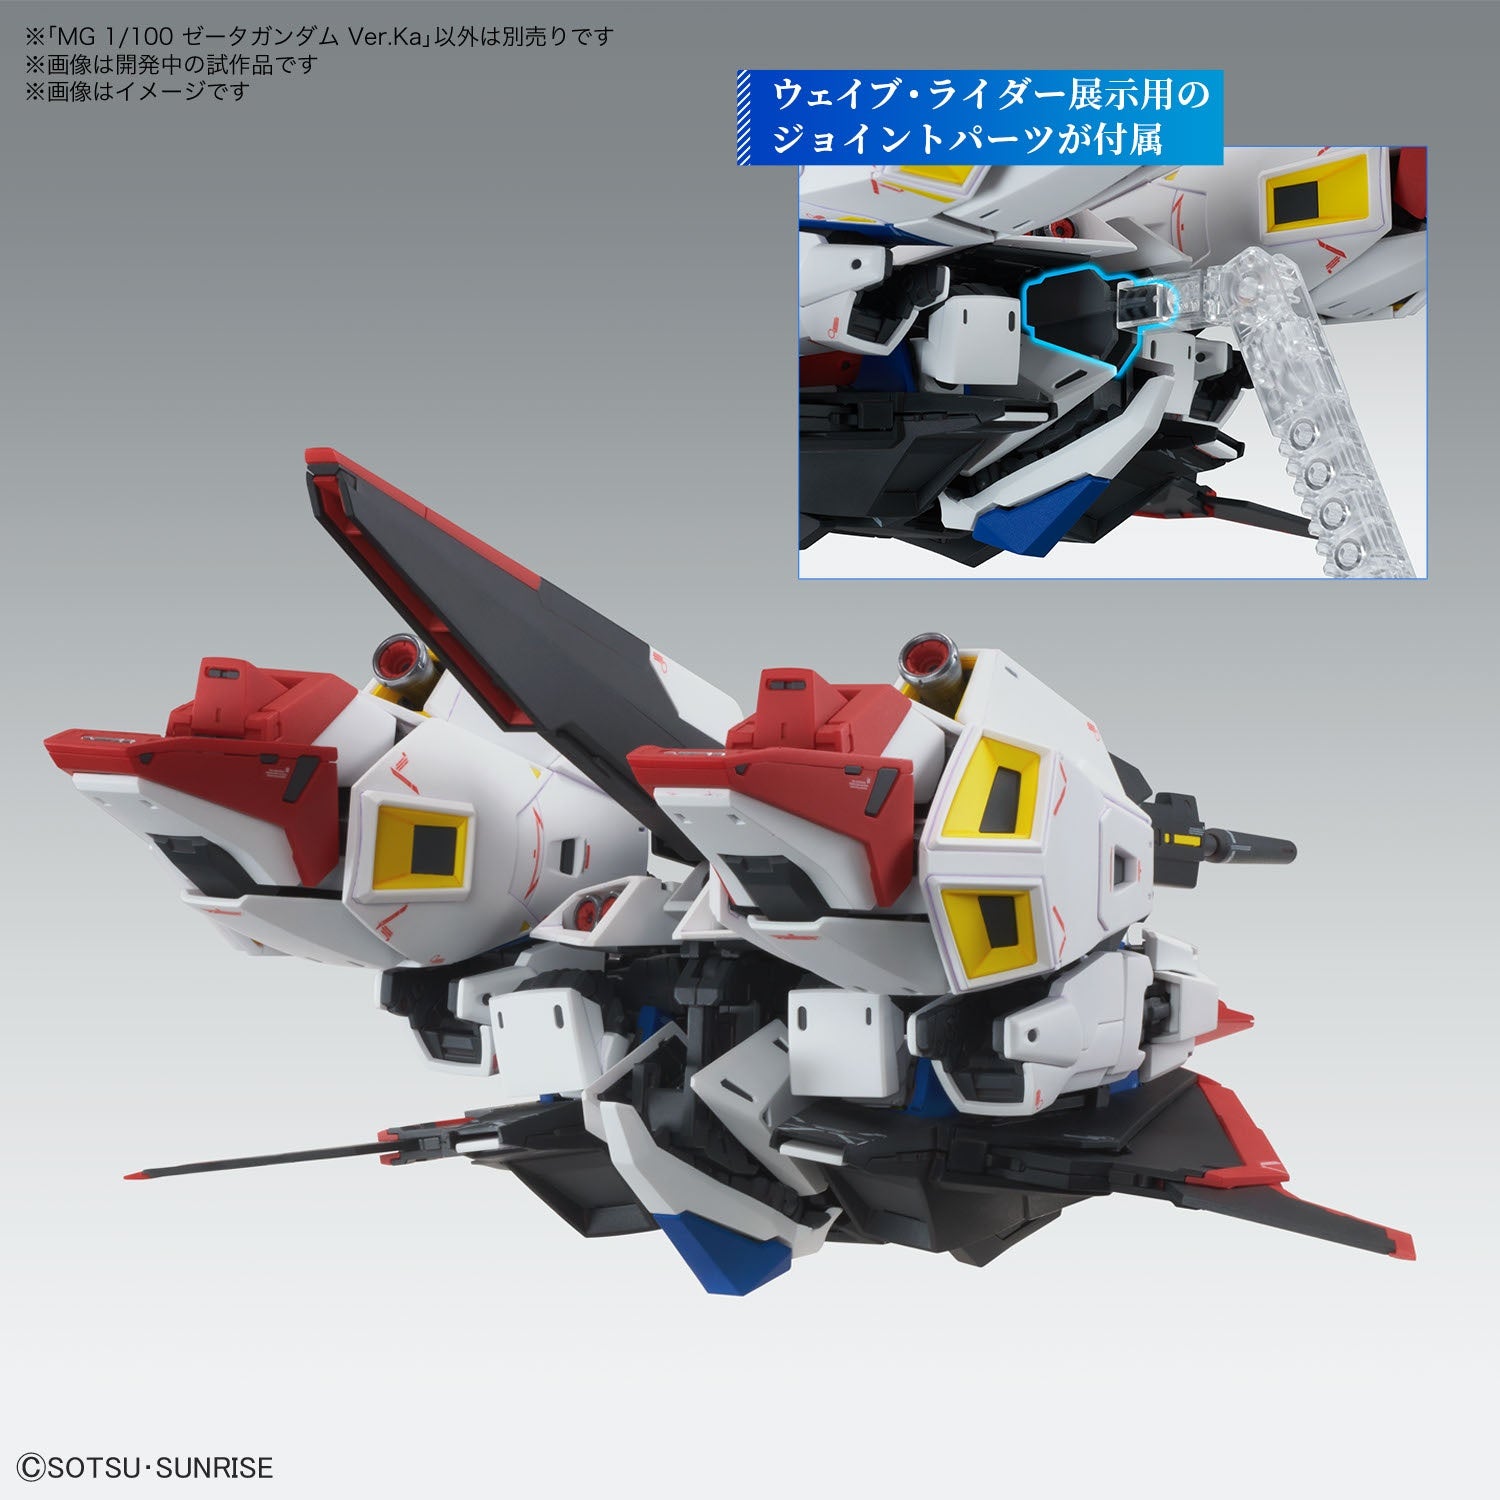 Mobile Suit Zeta Gundam MG Zeta Gundam (Ver.Ka) 1/100 Scale